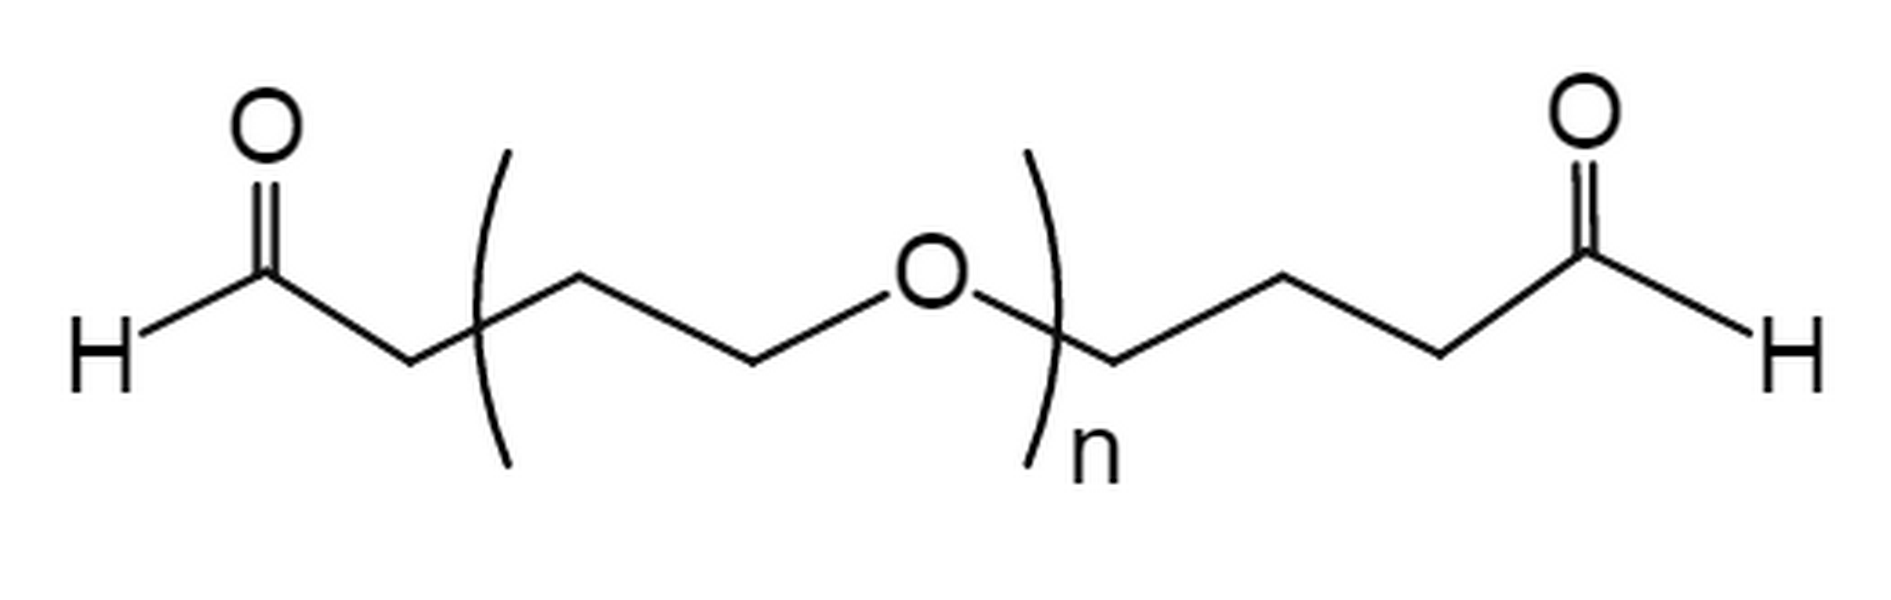 ButyrAldehyde-PEG-ButyrAldehyde, MW 20K